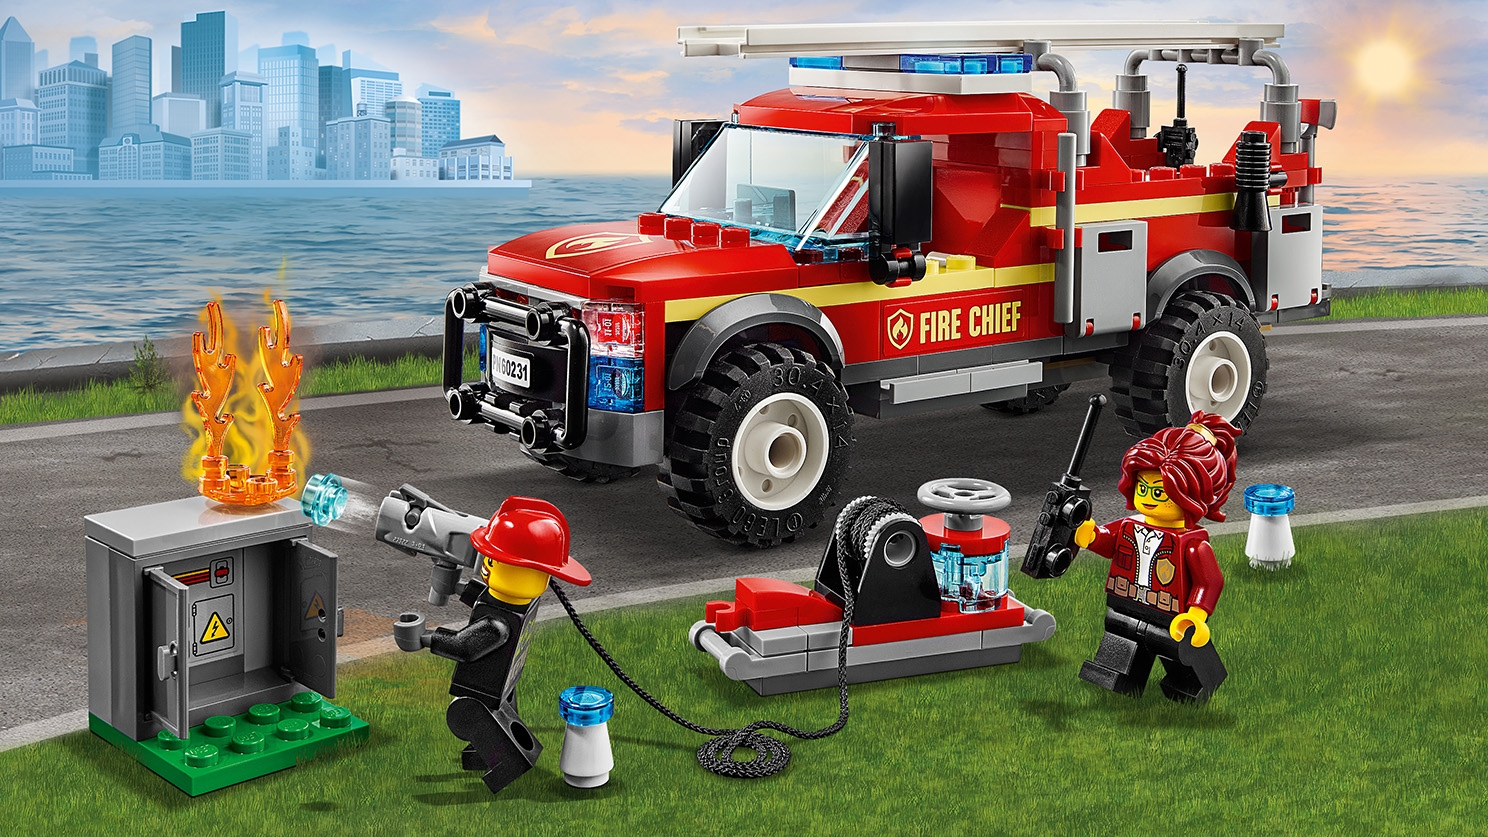 frimærke Jep Far Fire Chief Response Truck 60231 - LEGO® City Sets - LEGO.com for kids